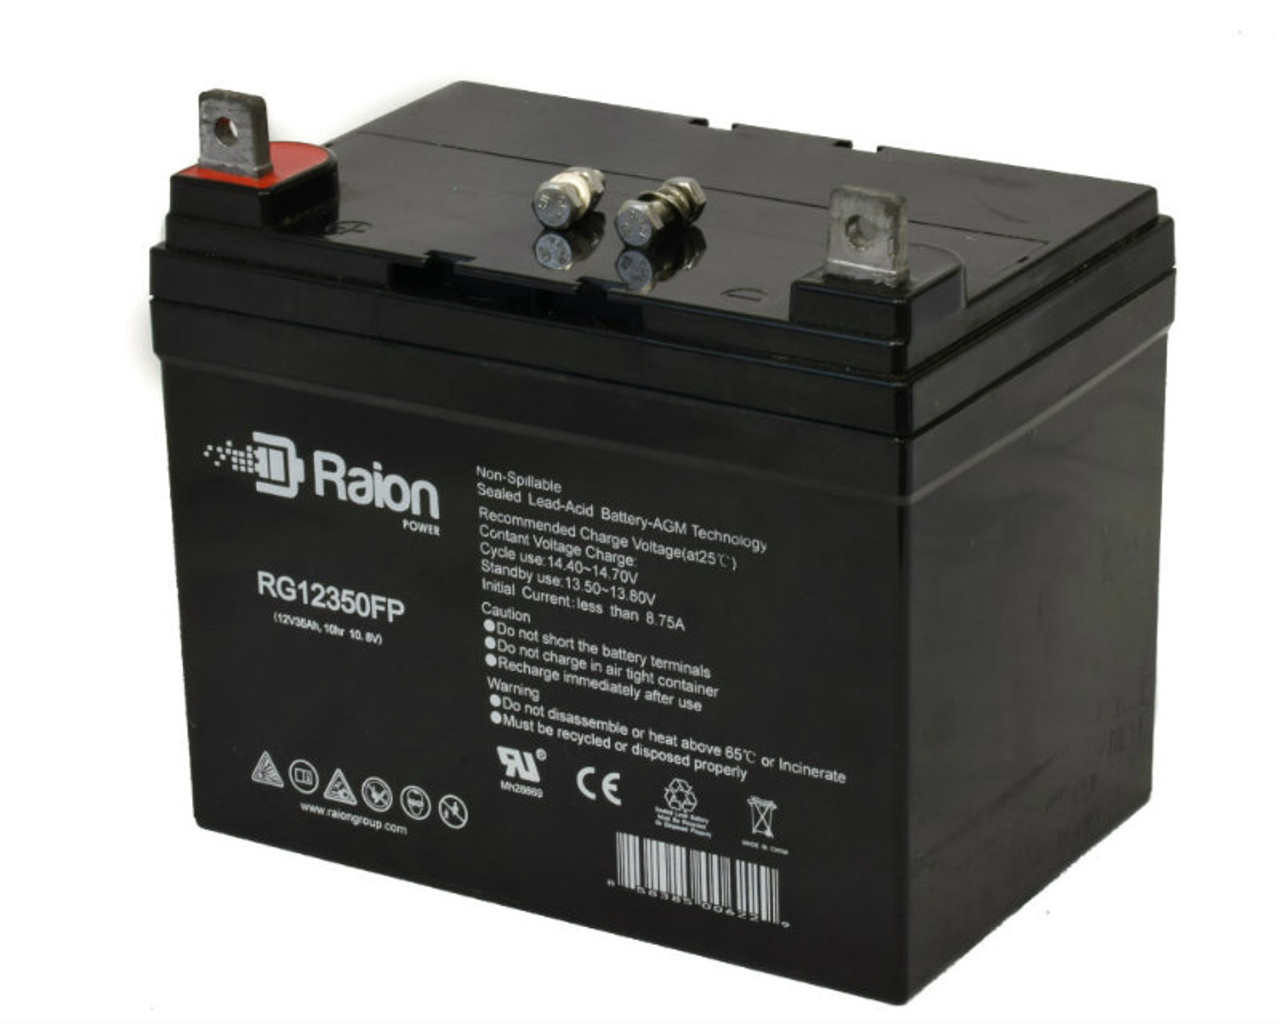 Raion Power RG12350FP 12V 35Ah Lead Acid Battery for Schumacher DSR 5799000042Z Jump Starter